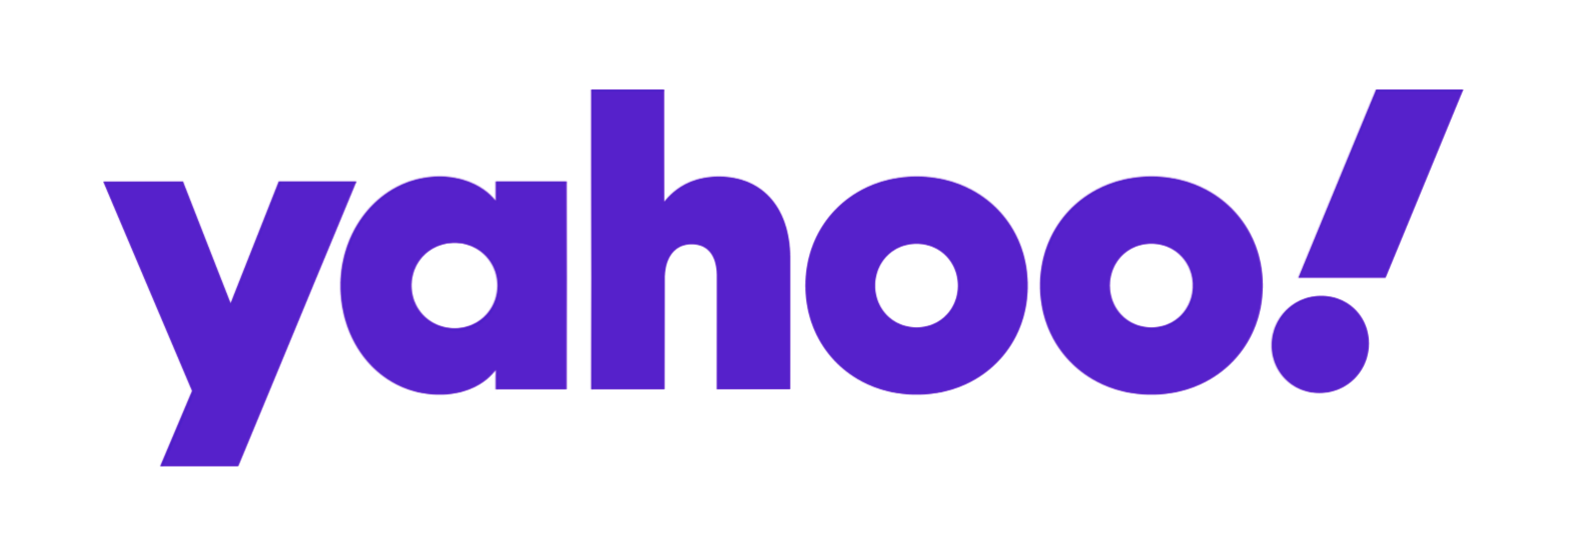 Yahoo logo - Torii